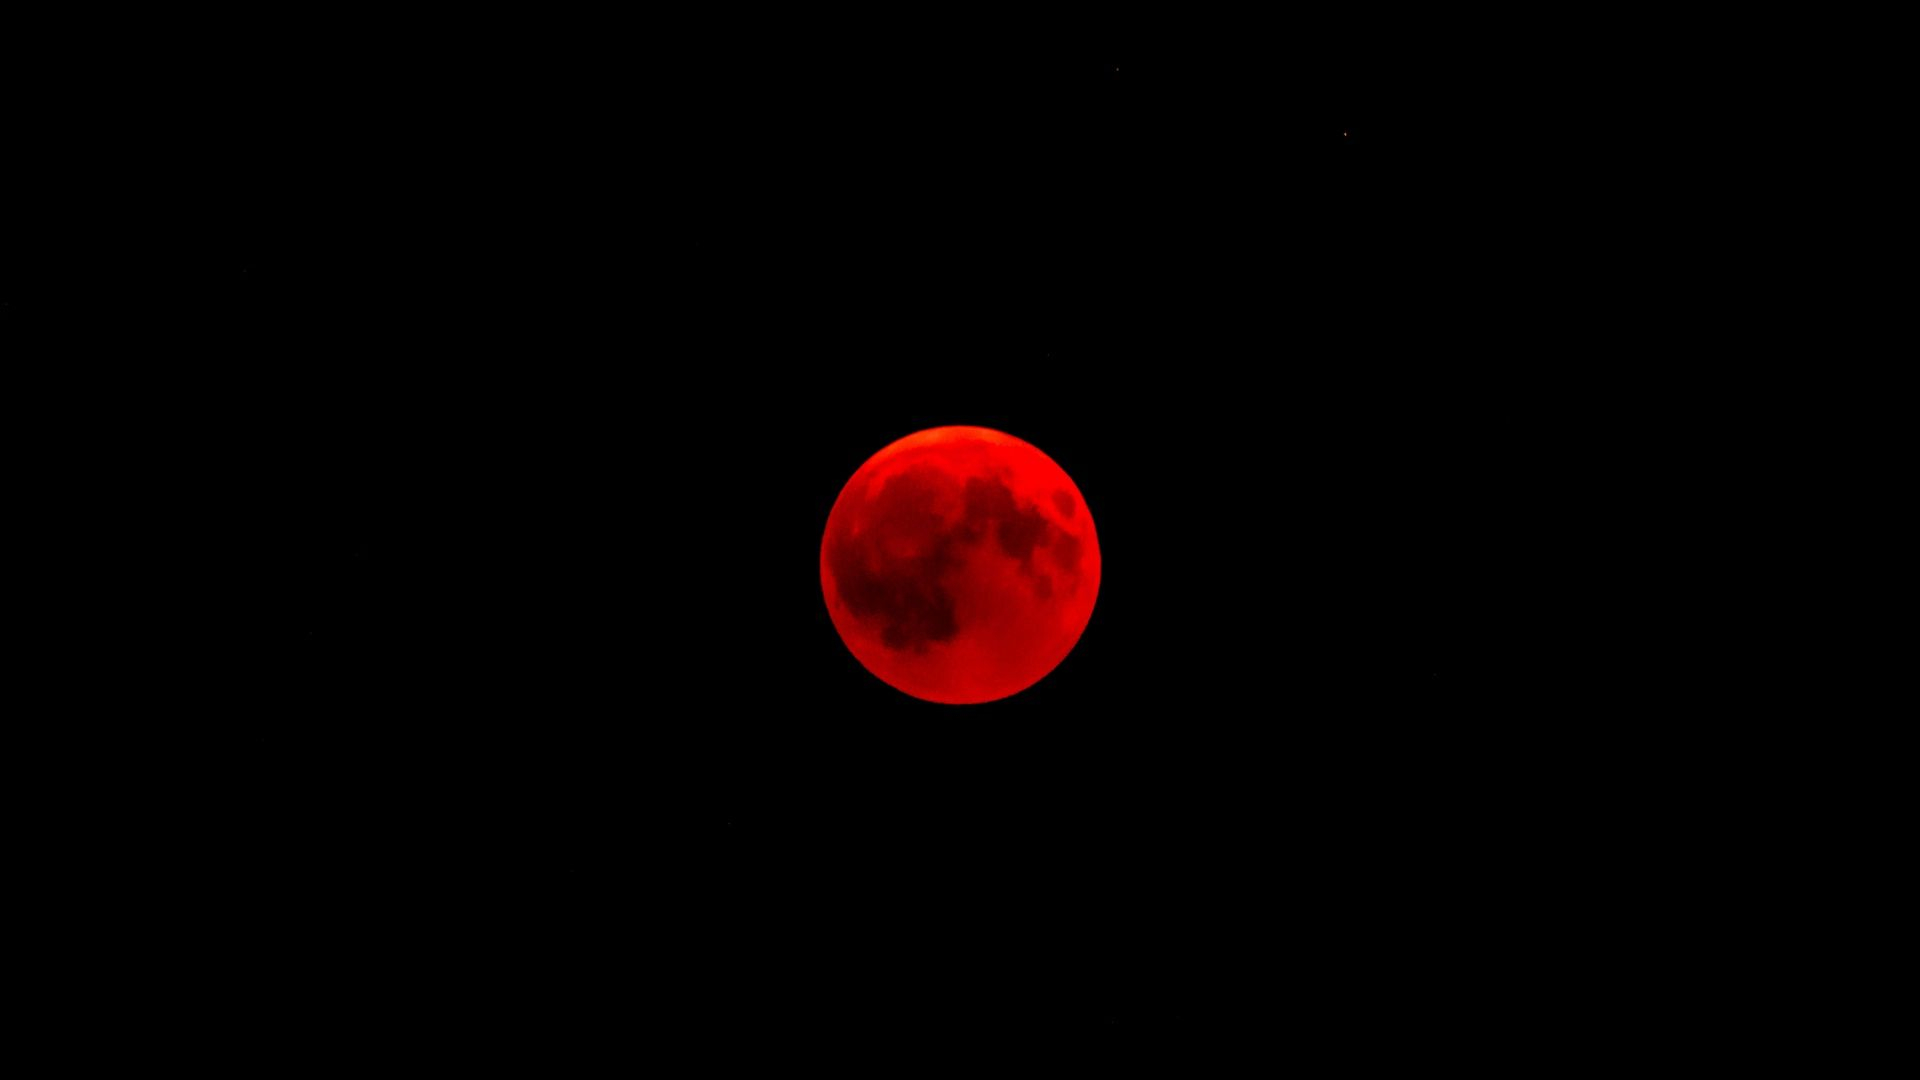 1920x1080 Wallpaper red moon moon full moon eclipse | Red and black wallpaper, Dark red wallpaper, Red m